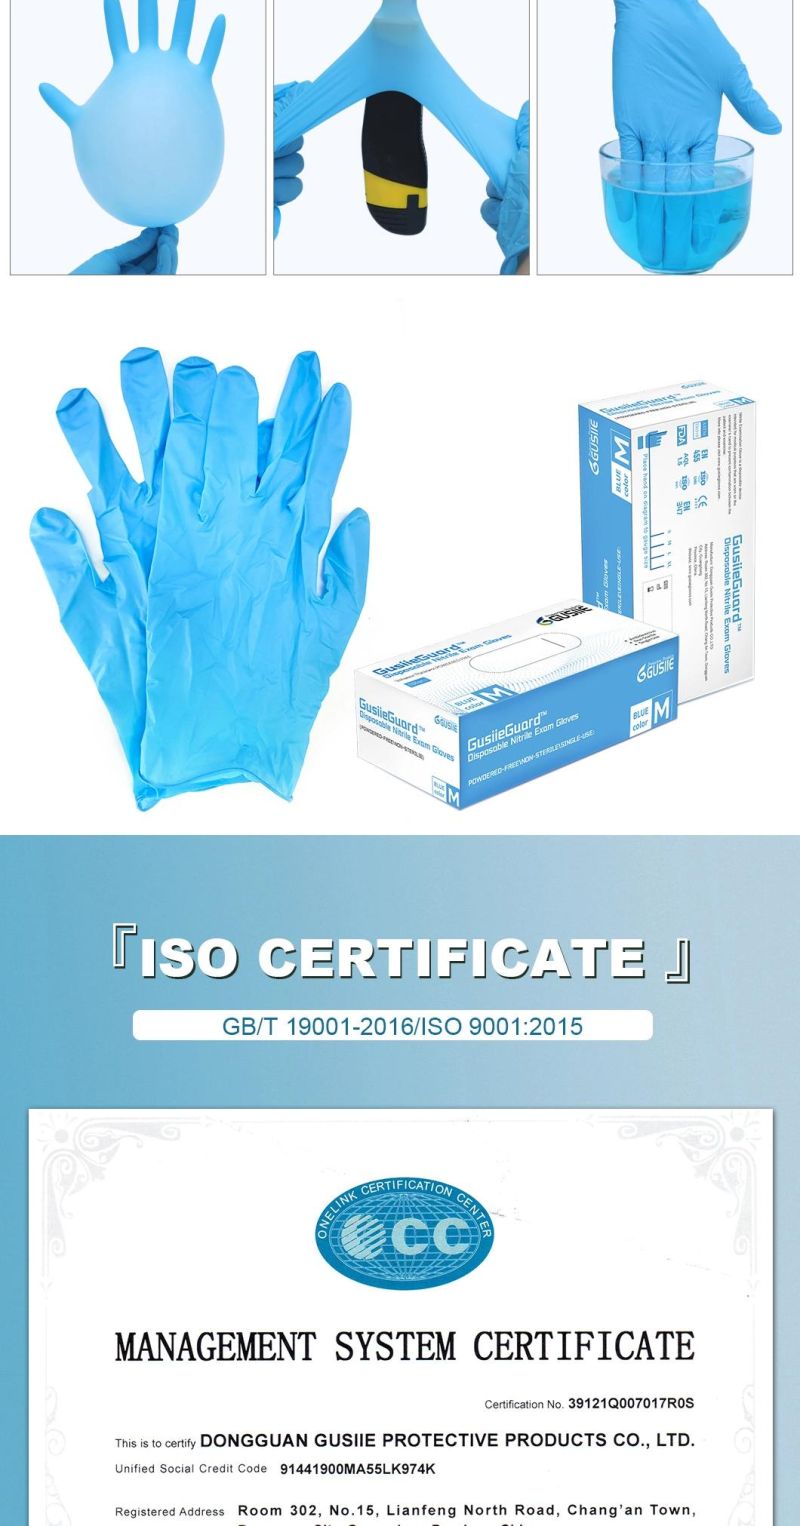 Disposable Safety Exam Blue Blacknitrile Gloves Without Powder Medical Examination Nitrile Large Gloves